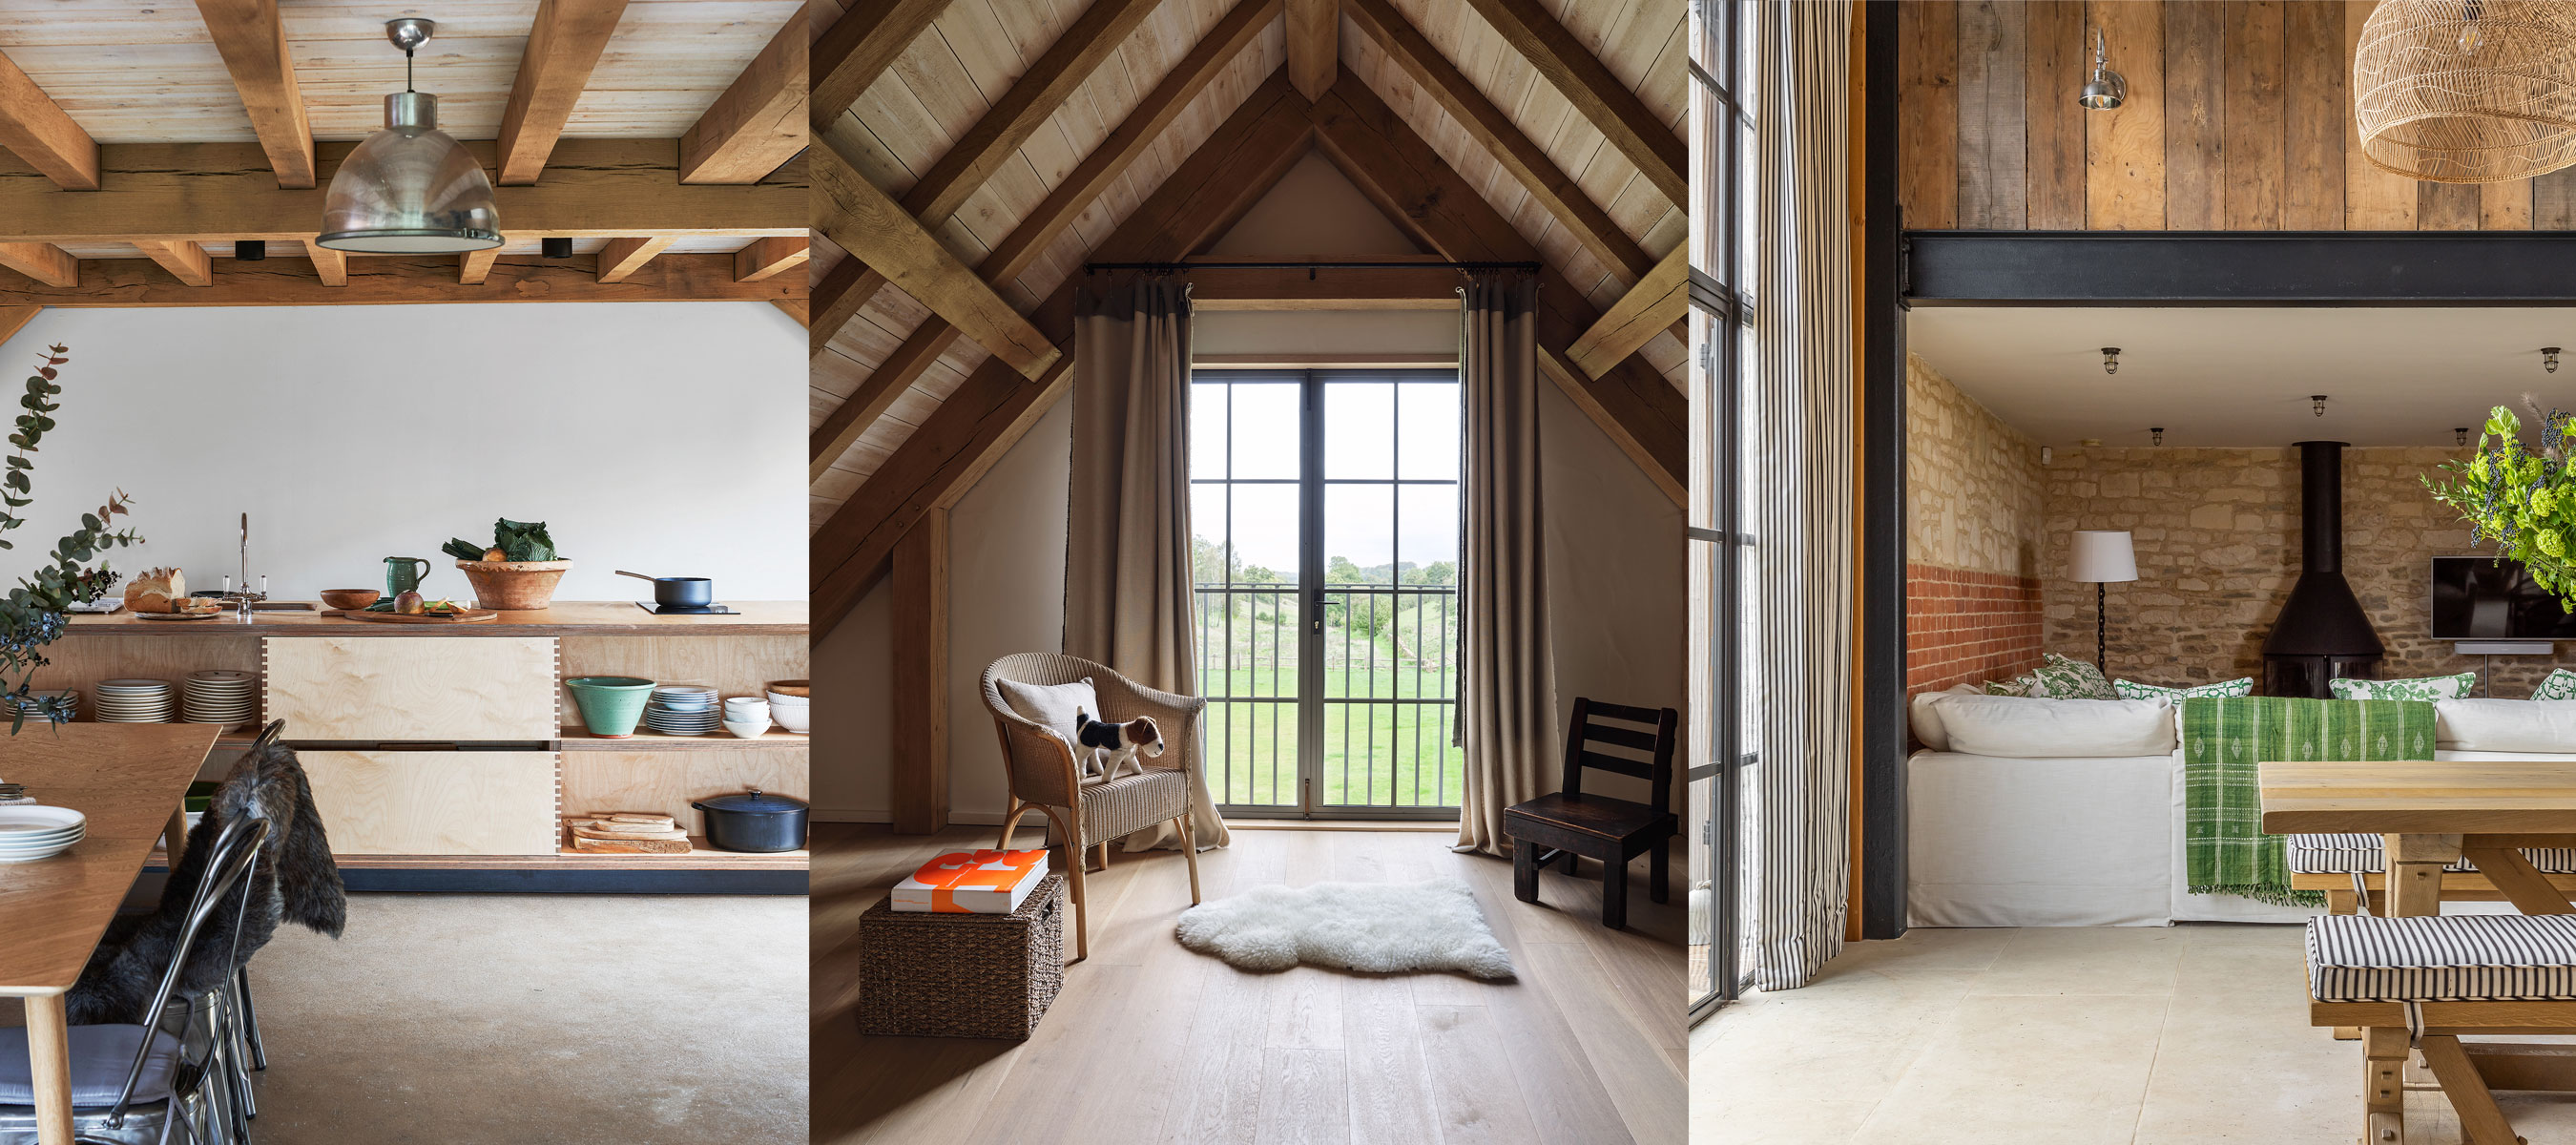 cabin decor ideas: 15 ways to create a cozy, rustic space |